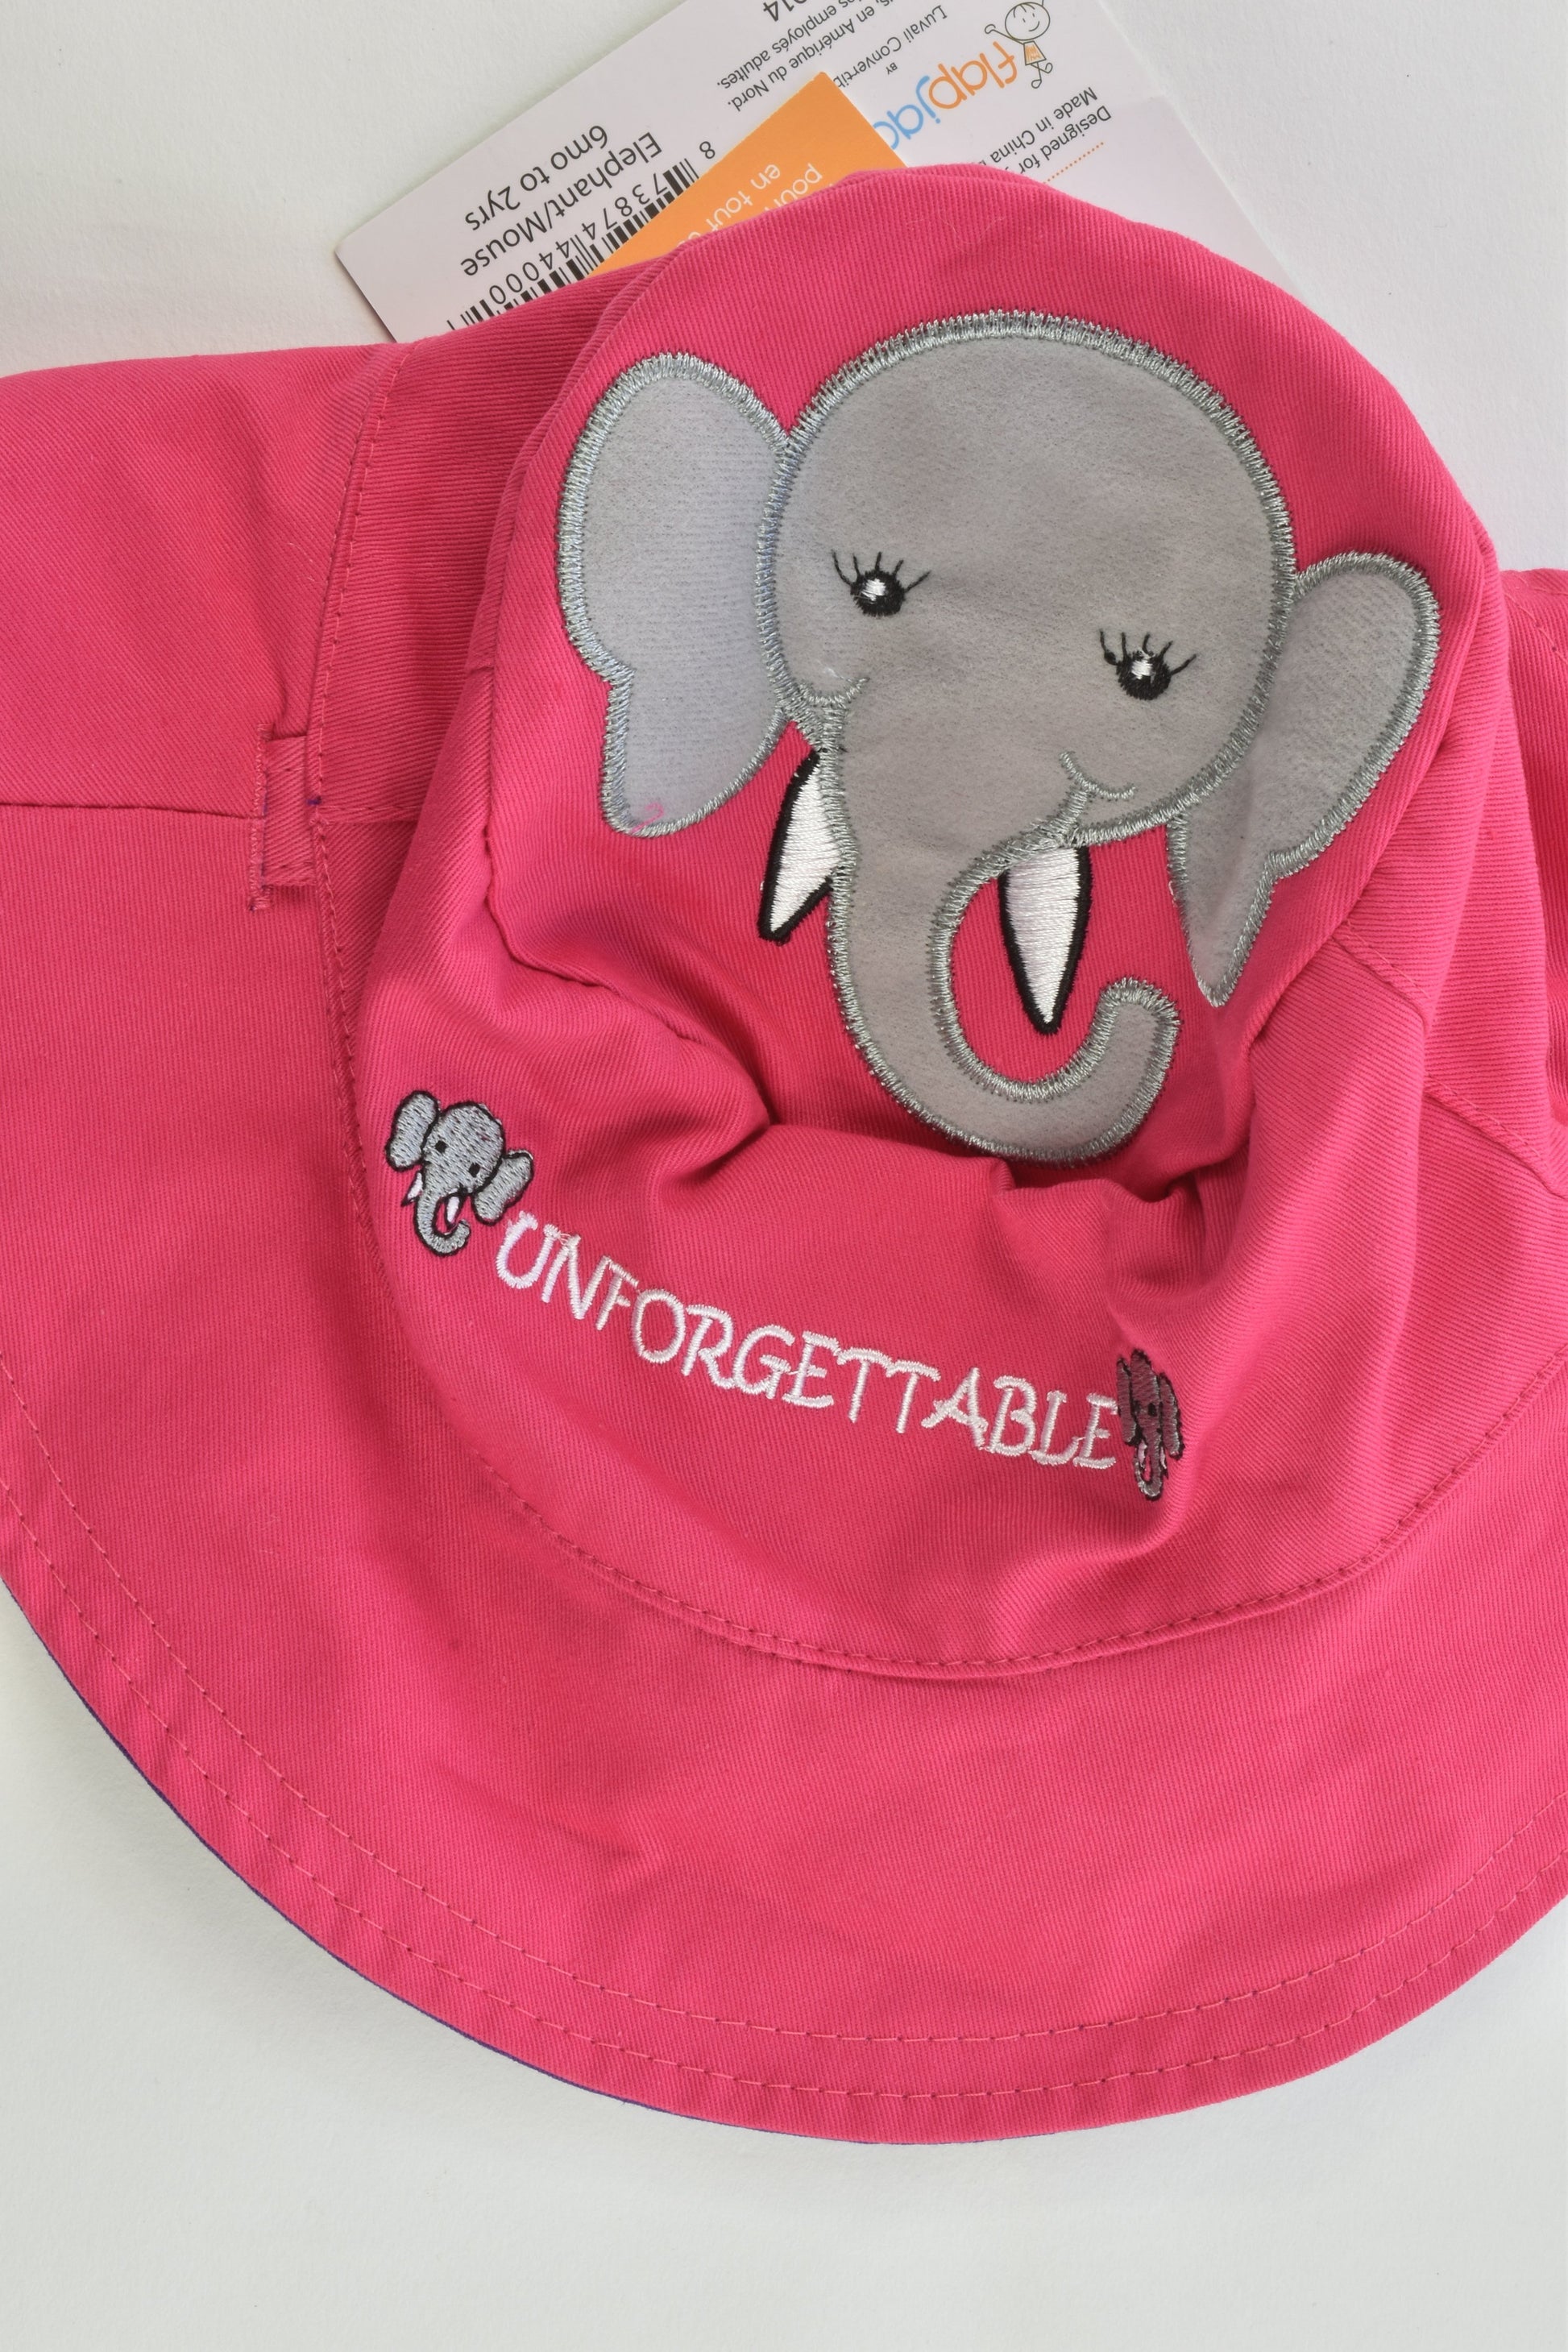 NEW FlapJack Kids Size 6-24 months Reversible Mouse/Elephant Sun Hat